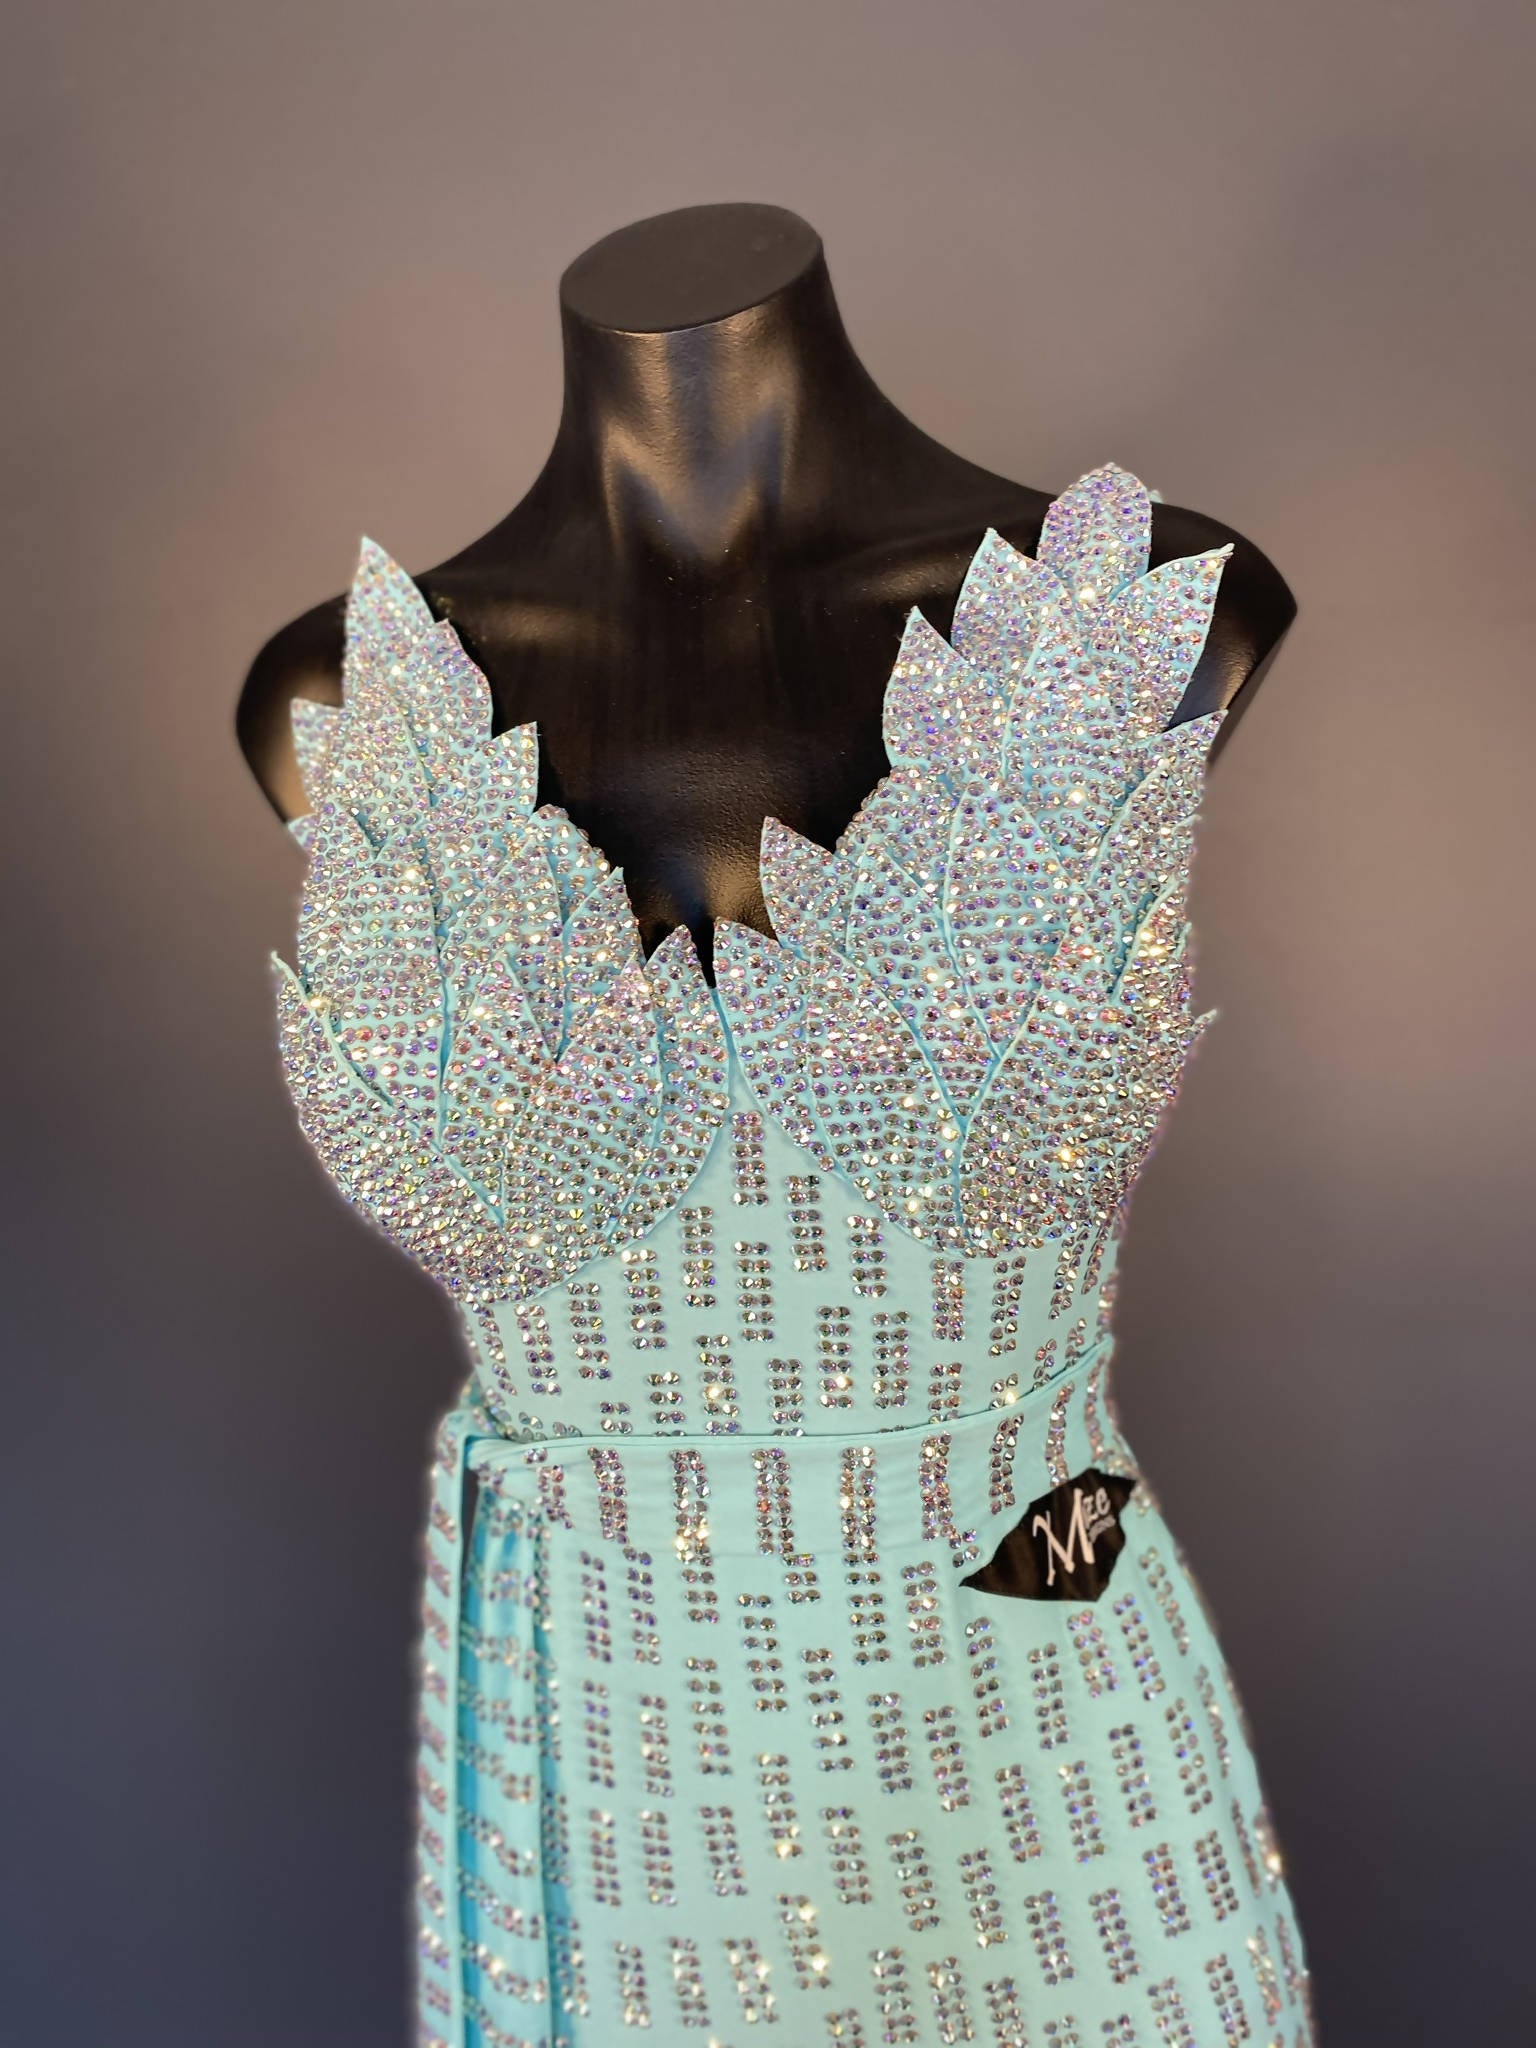 New Fully Stoned Blue Latin Dress (ballroom dresses for sale, latin, dancesport, rhythm)